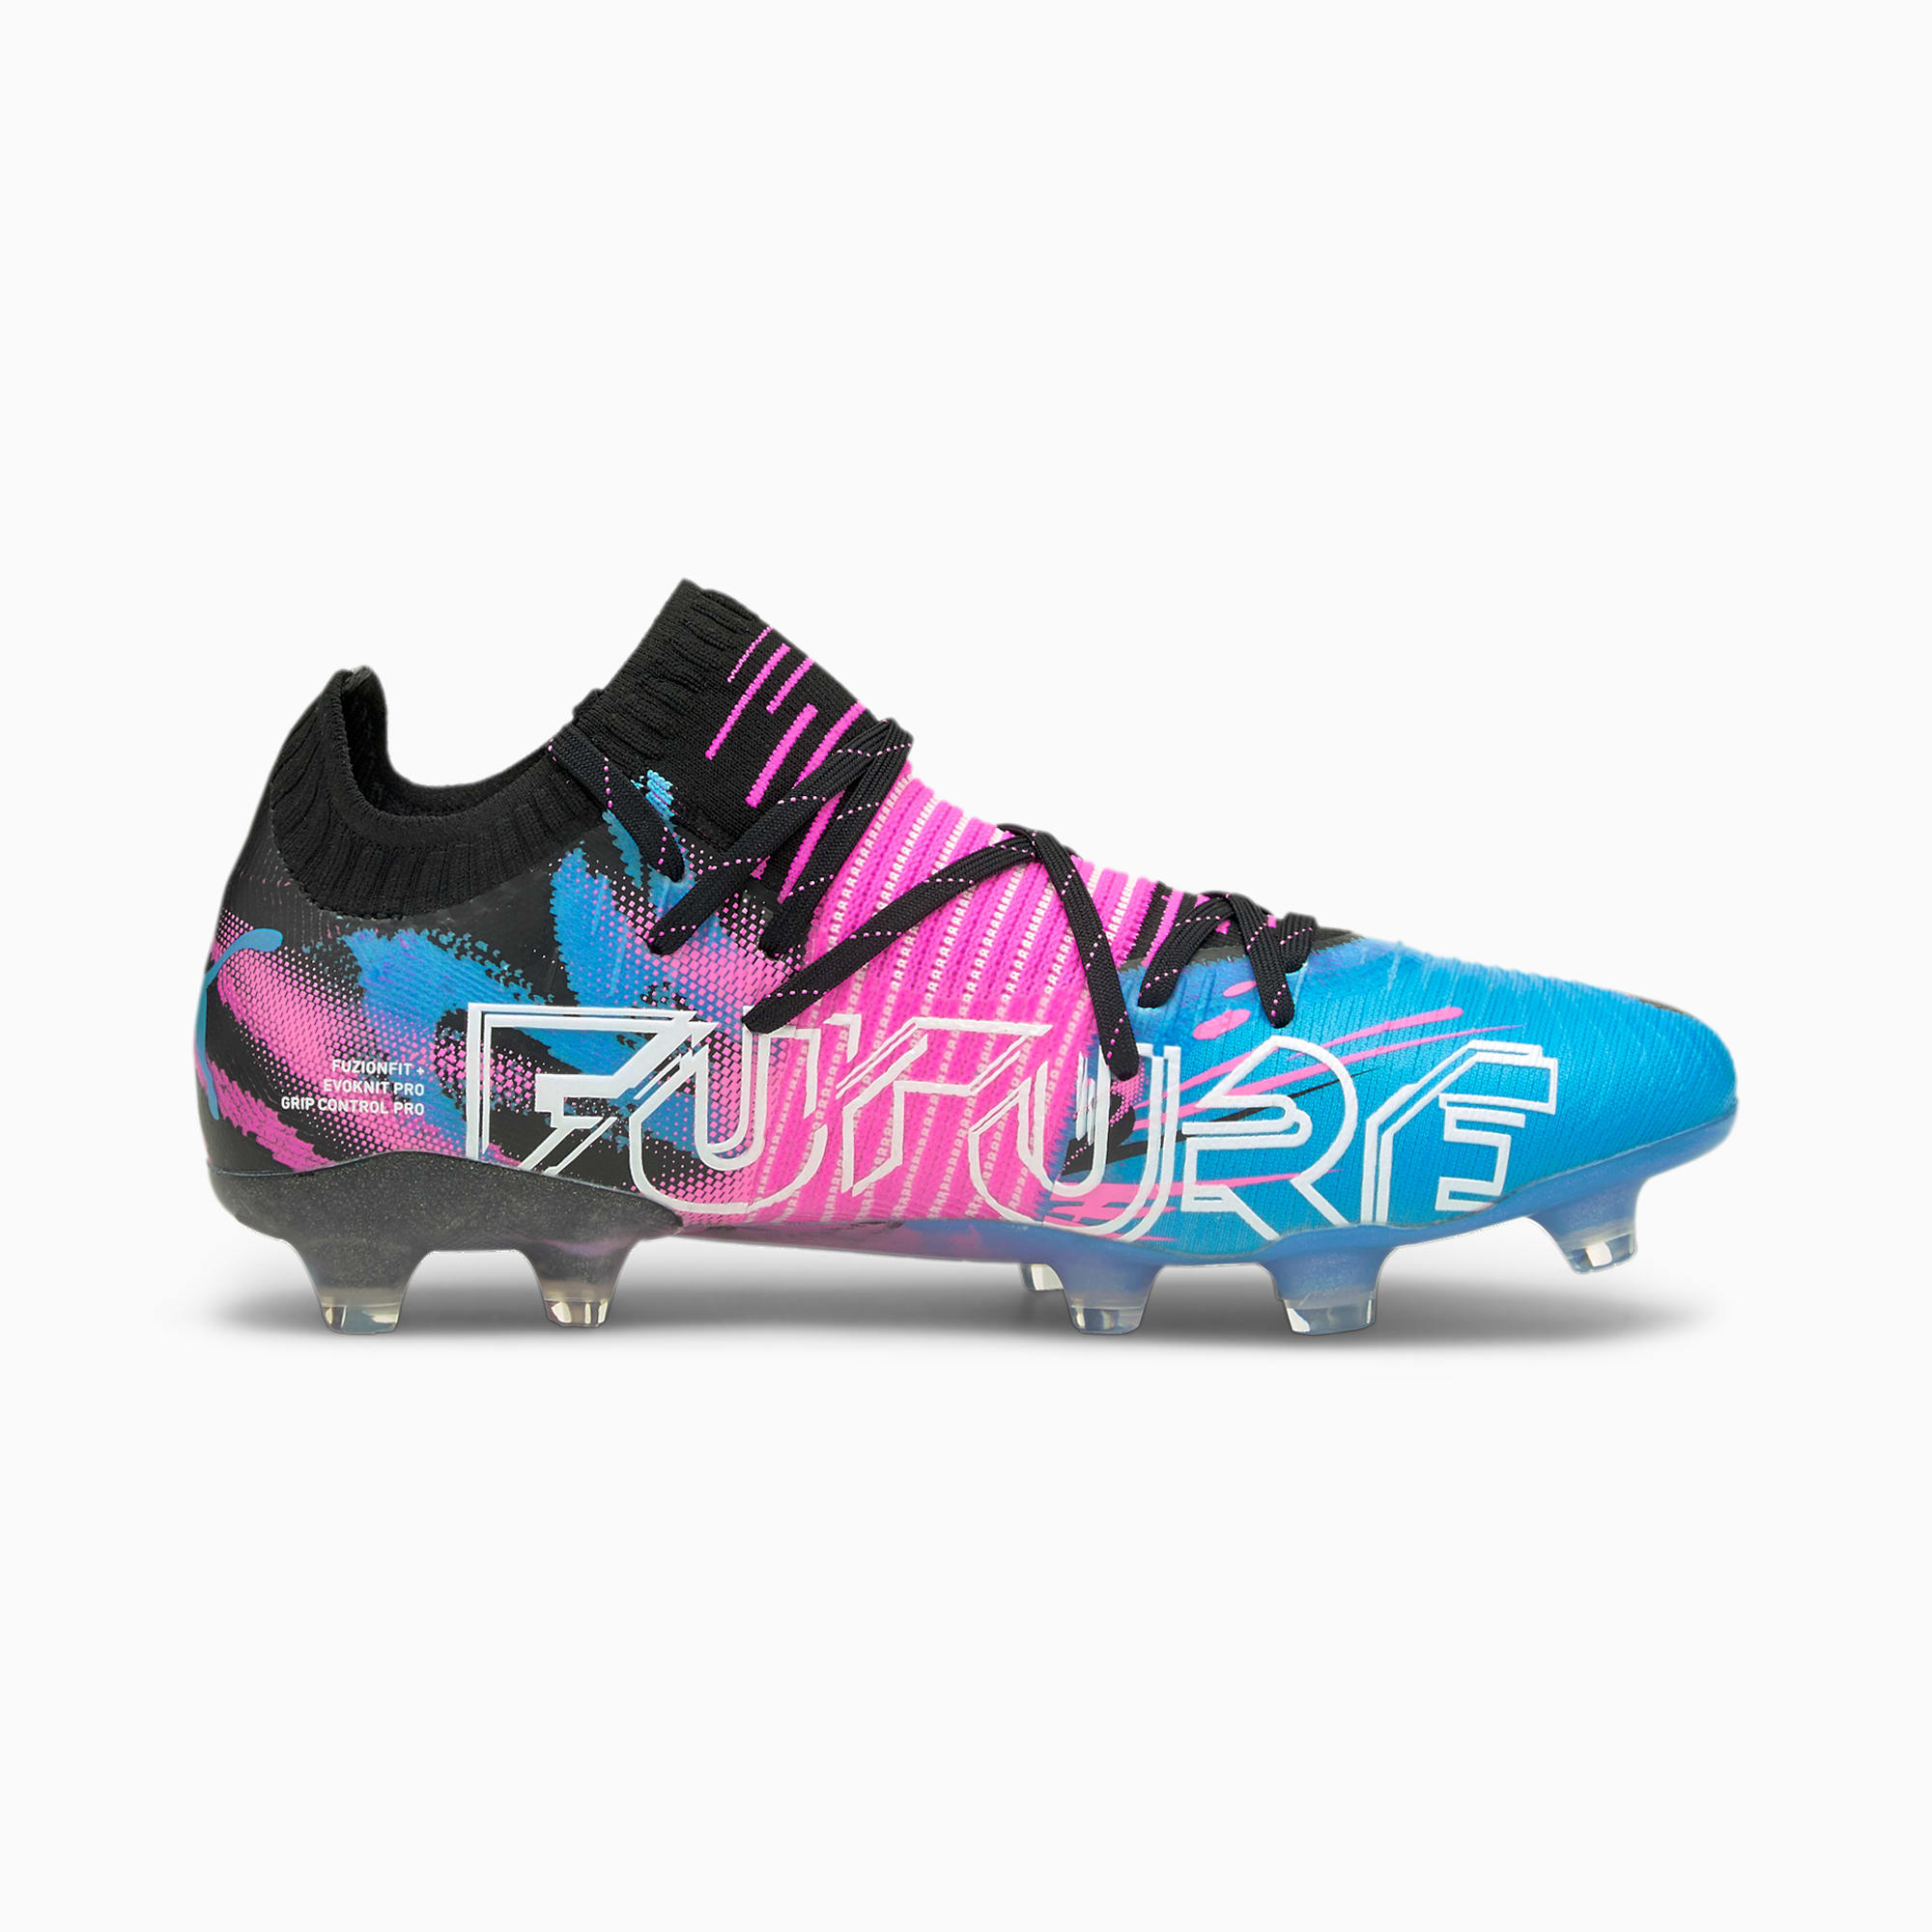 Future Z 1 1 Creativity Fg Ag Men S Football Boots Puma Neymar Jr Puma Latvia